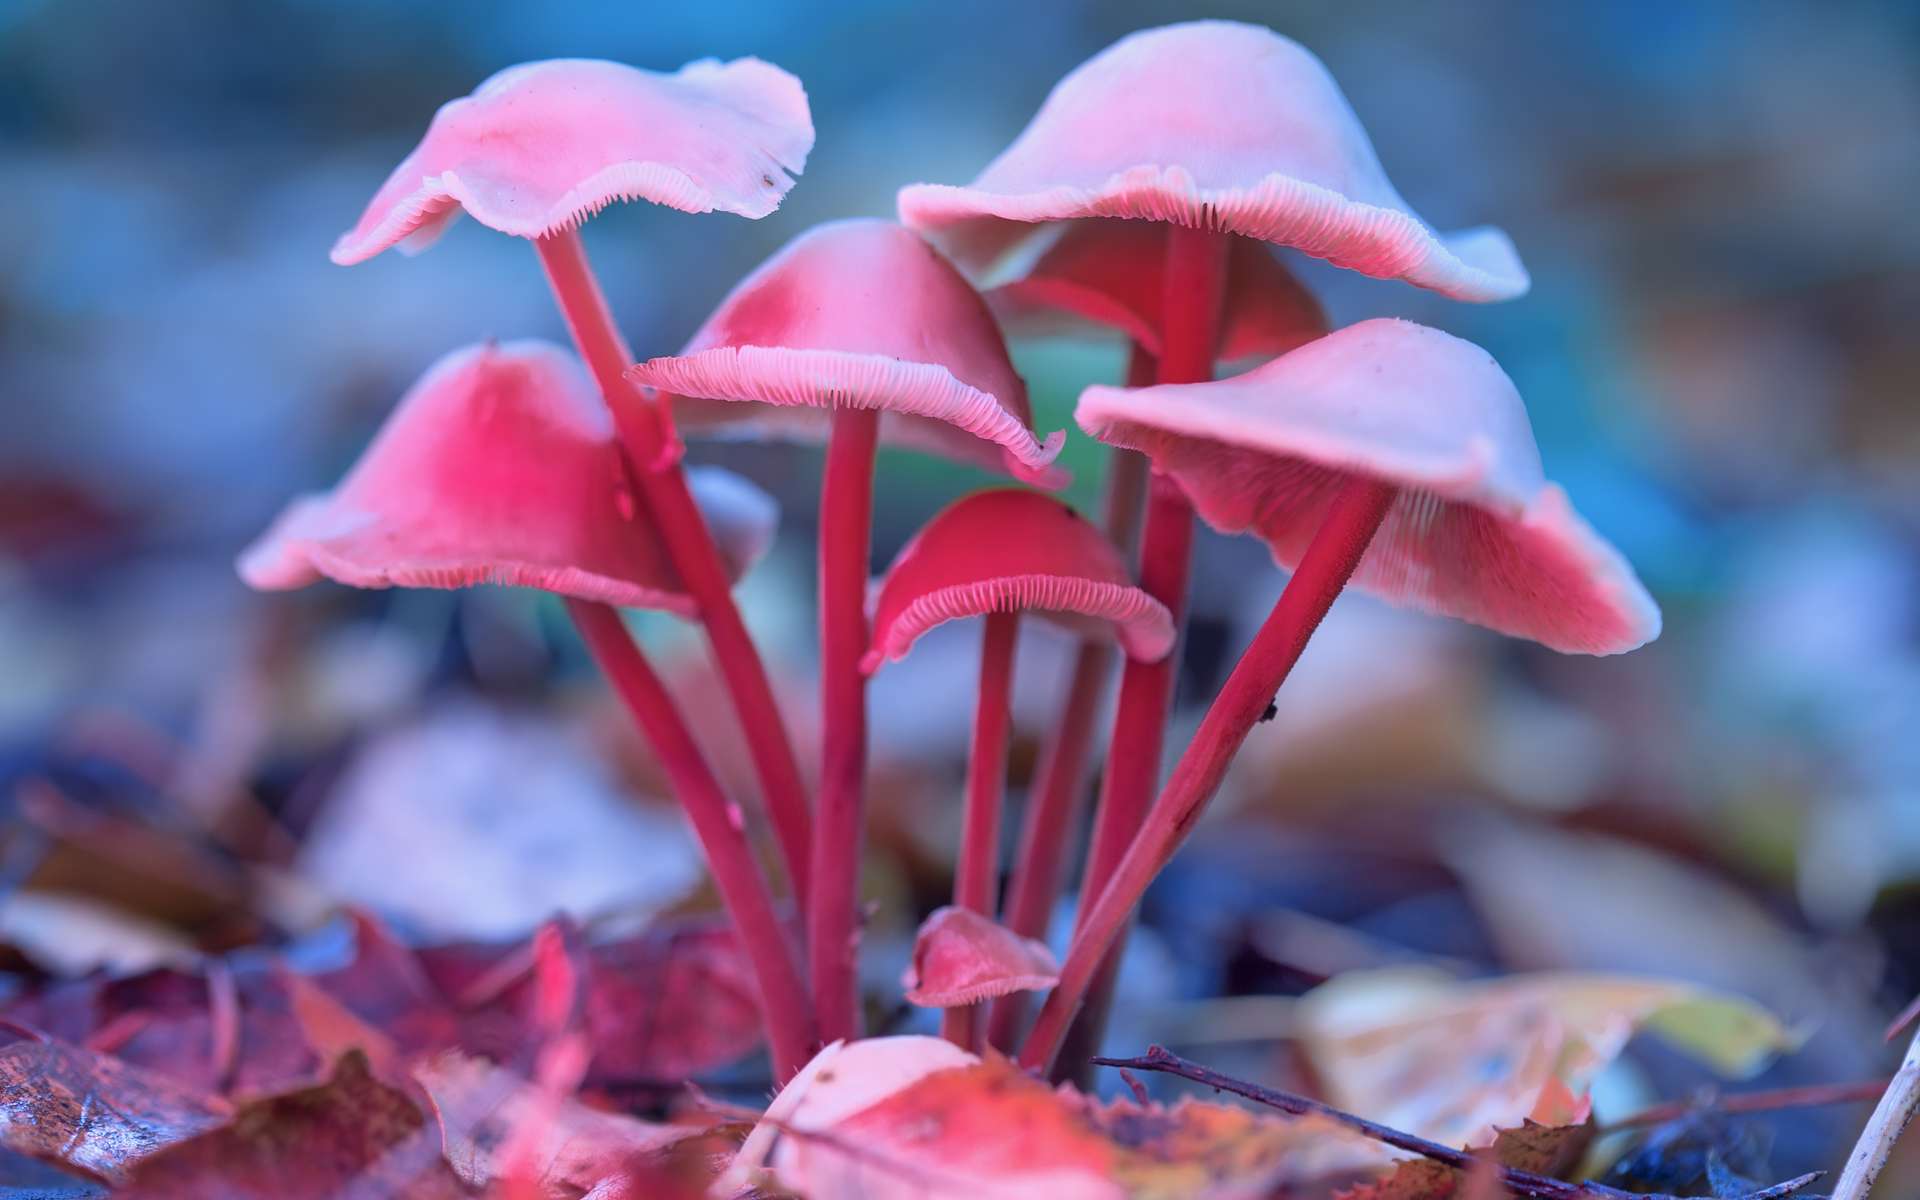 Des champignons contenant de la psilocybine. © Sergei, Adobe Stock